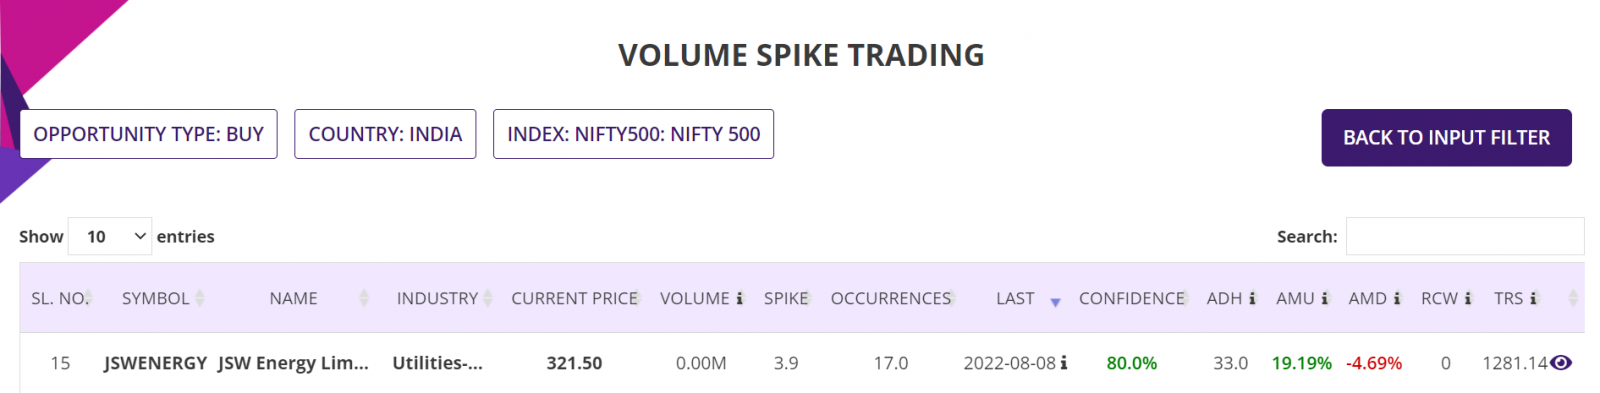 Volume spike trading, India, summary report